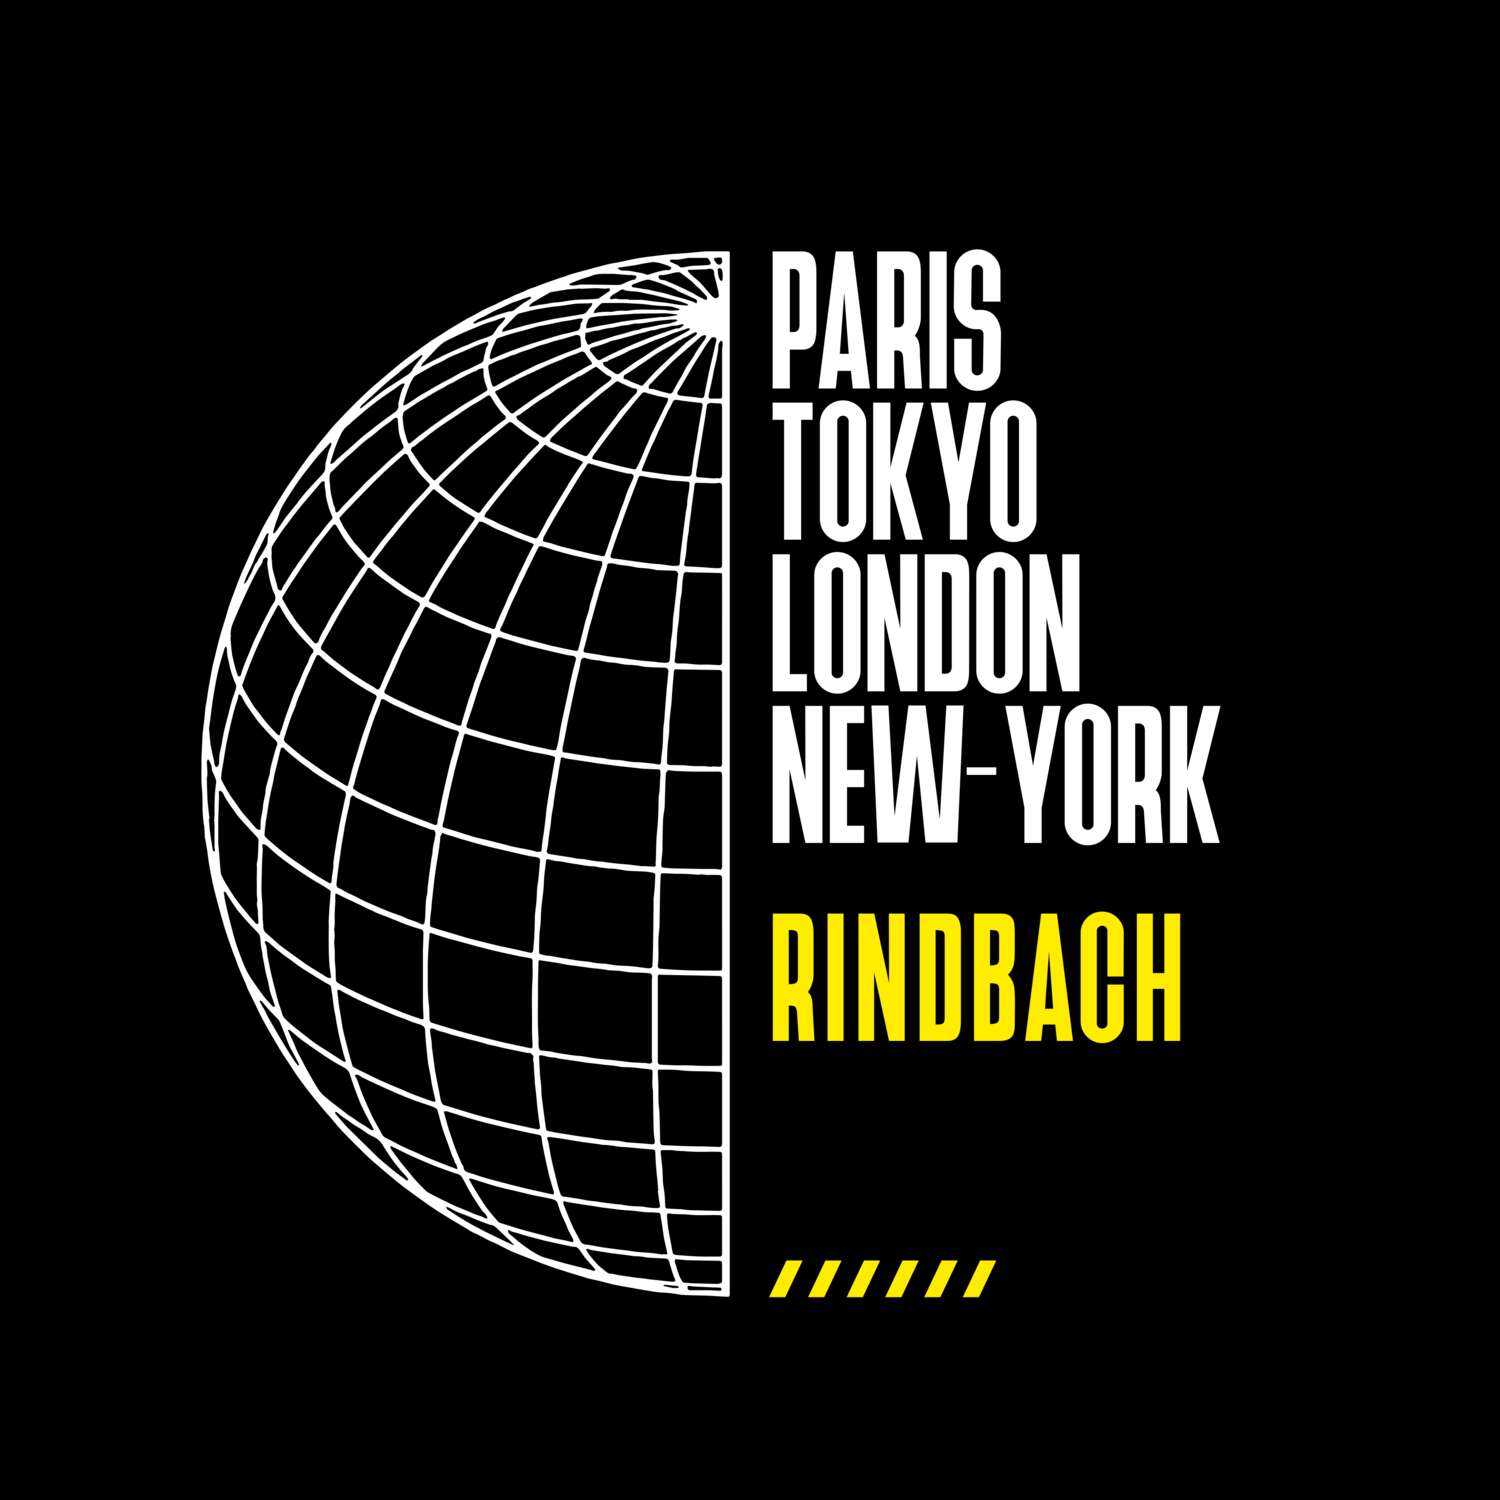 Rindbach T-Shirt »Paris Tokyo London«